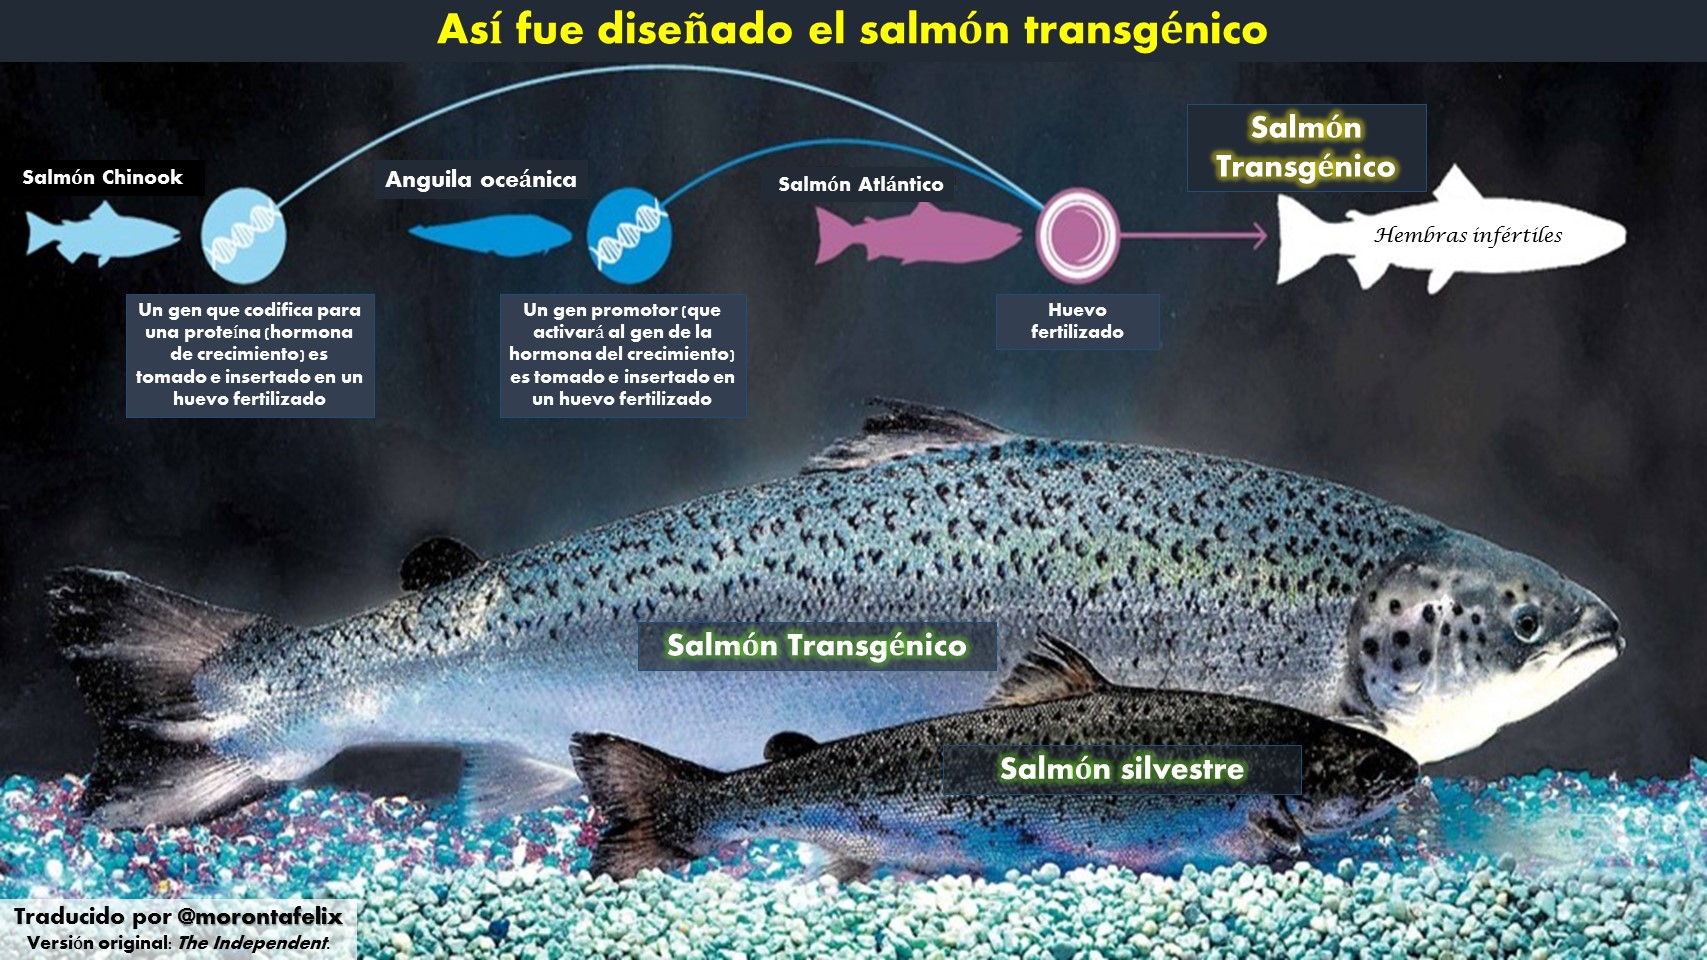 salmon transgenico felix moronta